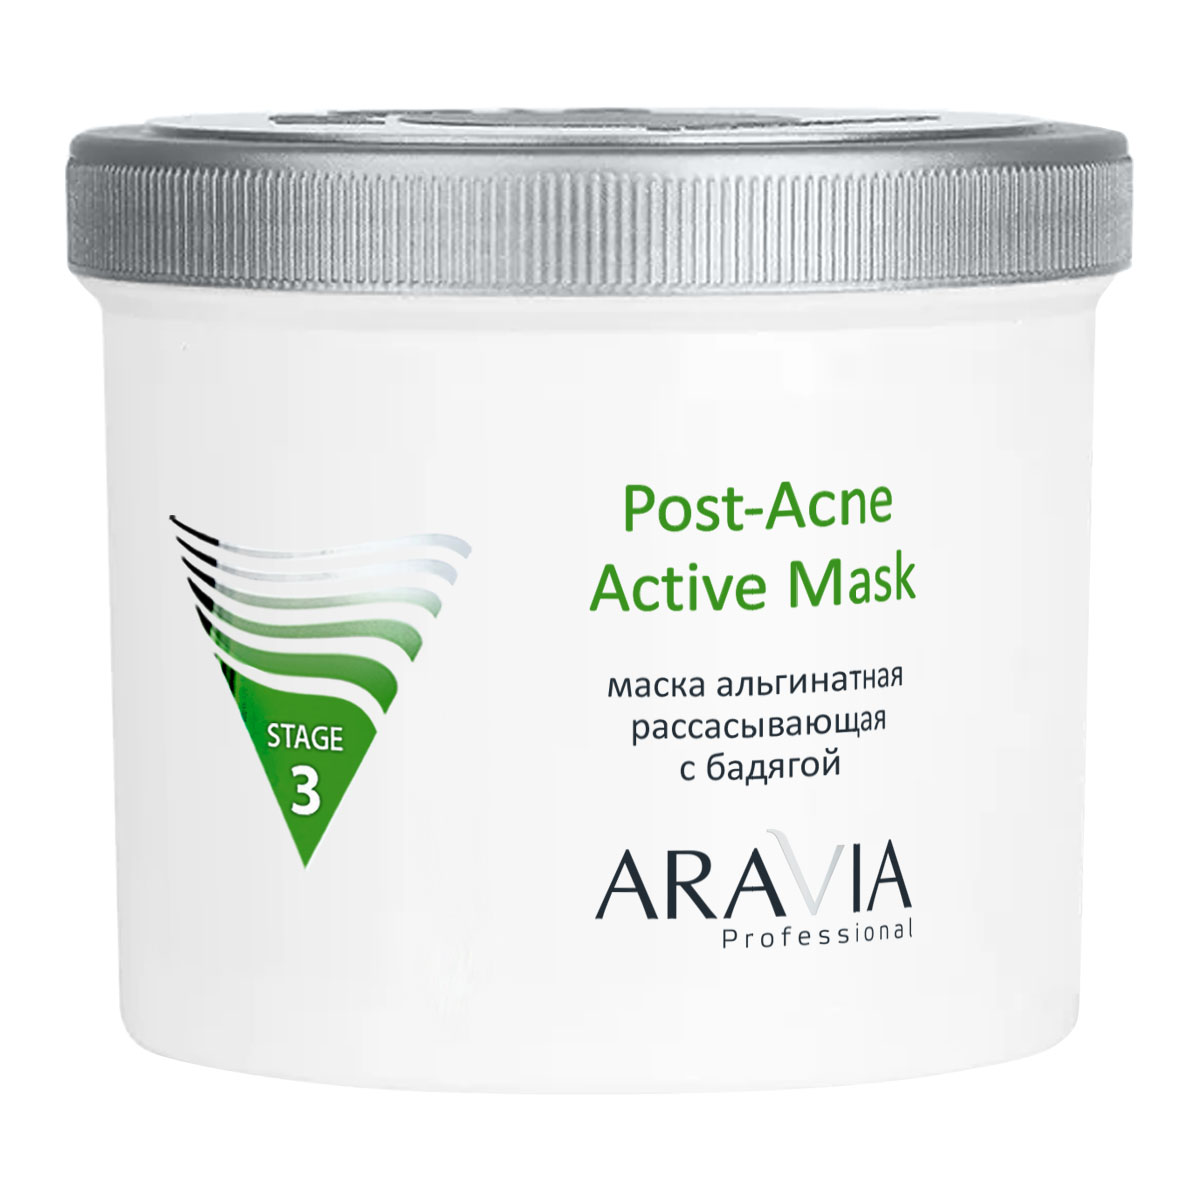 Aravia Professional Альгинатная рассасывающая маска с бадягой Post-Acne Active Mask, 550 мл (Aravia Professional, Уход за лицом) фото